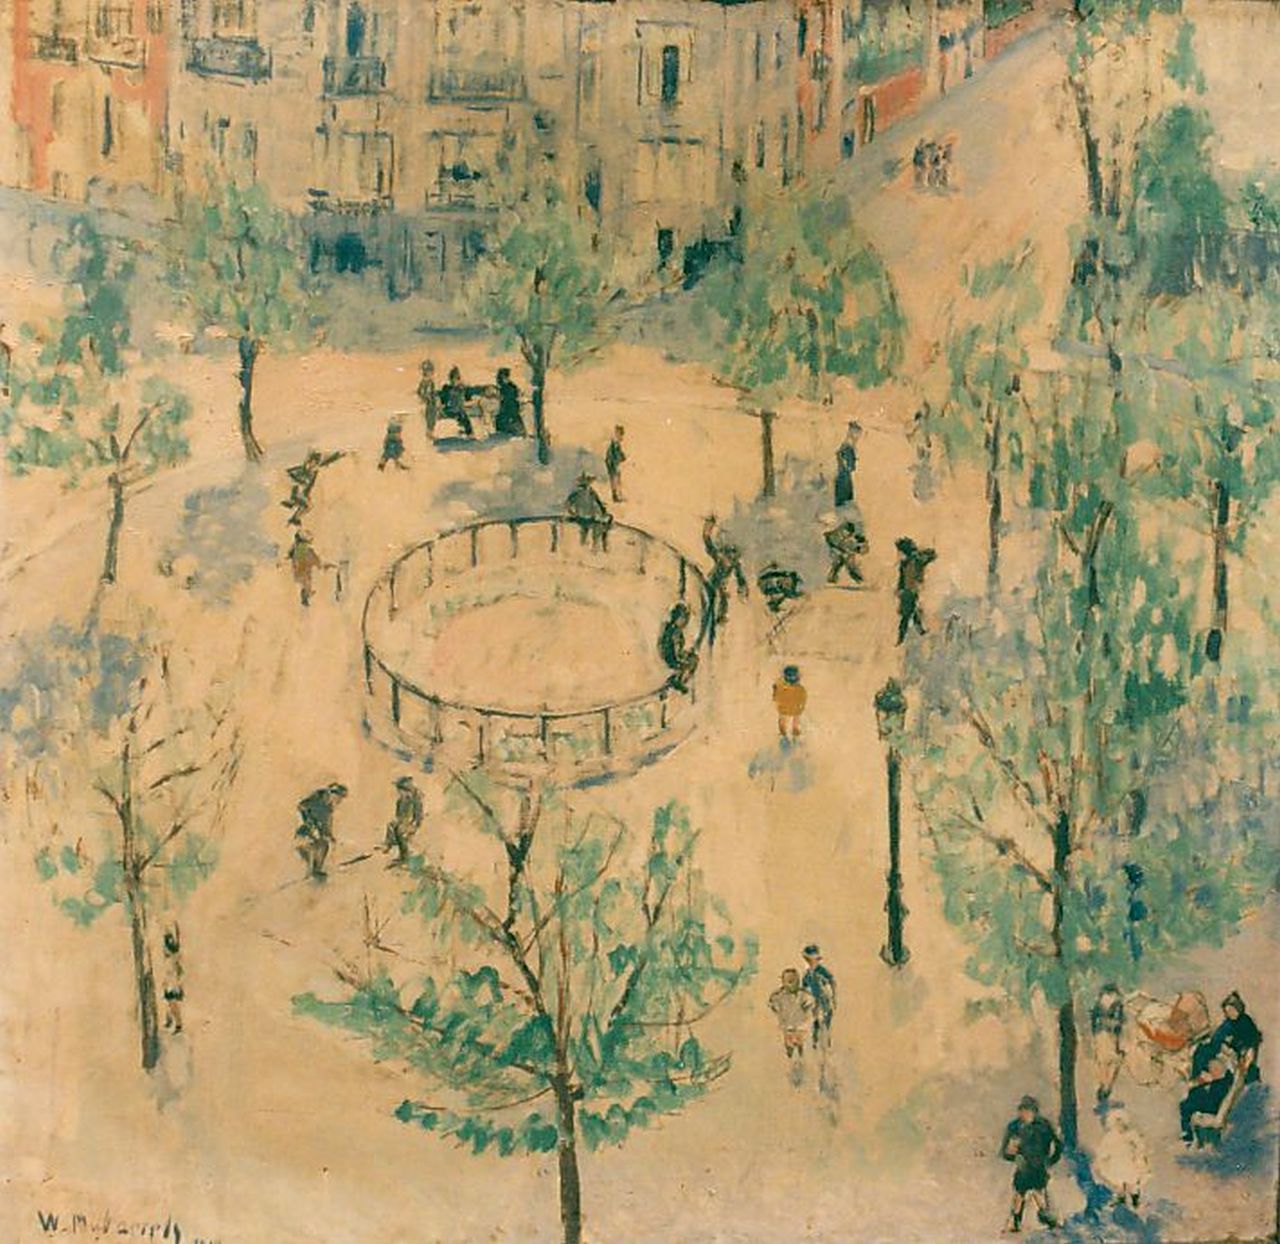 Paerels W.A.  | 'Willem' Adriaan Paerels, A town view, Öl auf Leinwand 72,5 x 74,0 cm, signed l.l. und dated 1914